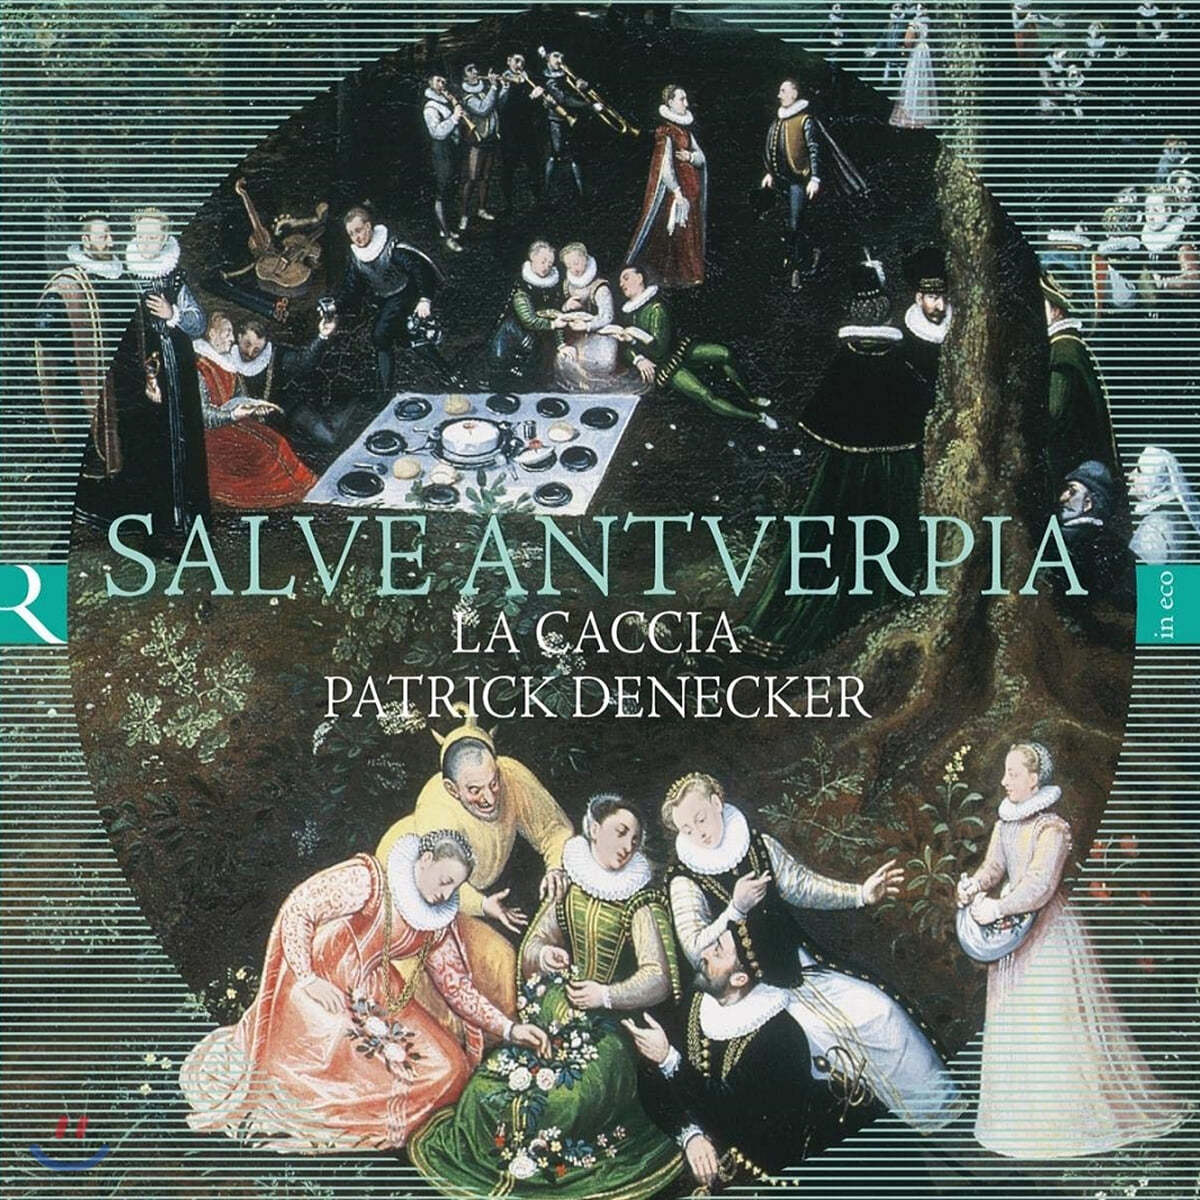 Patrick Denecker 16세기 벨기에 `안트베르펜` 지역의 음악 (Salve Antverpia)